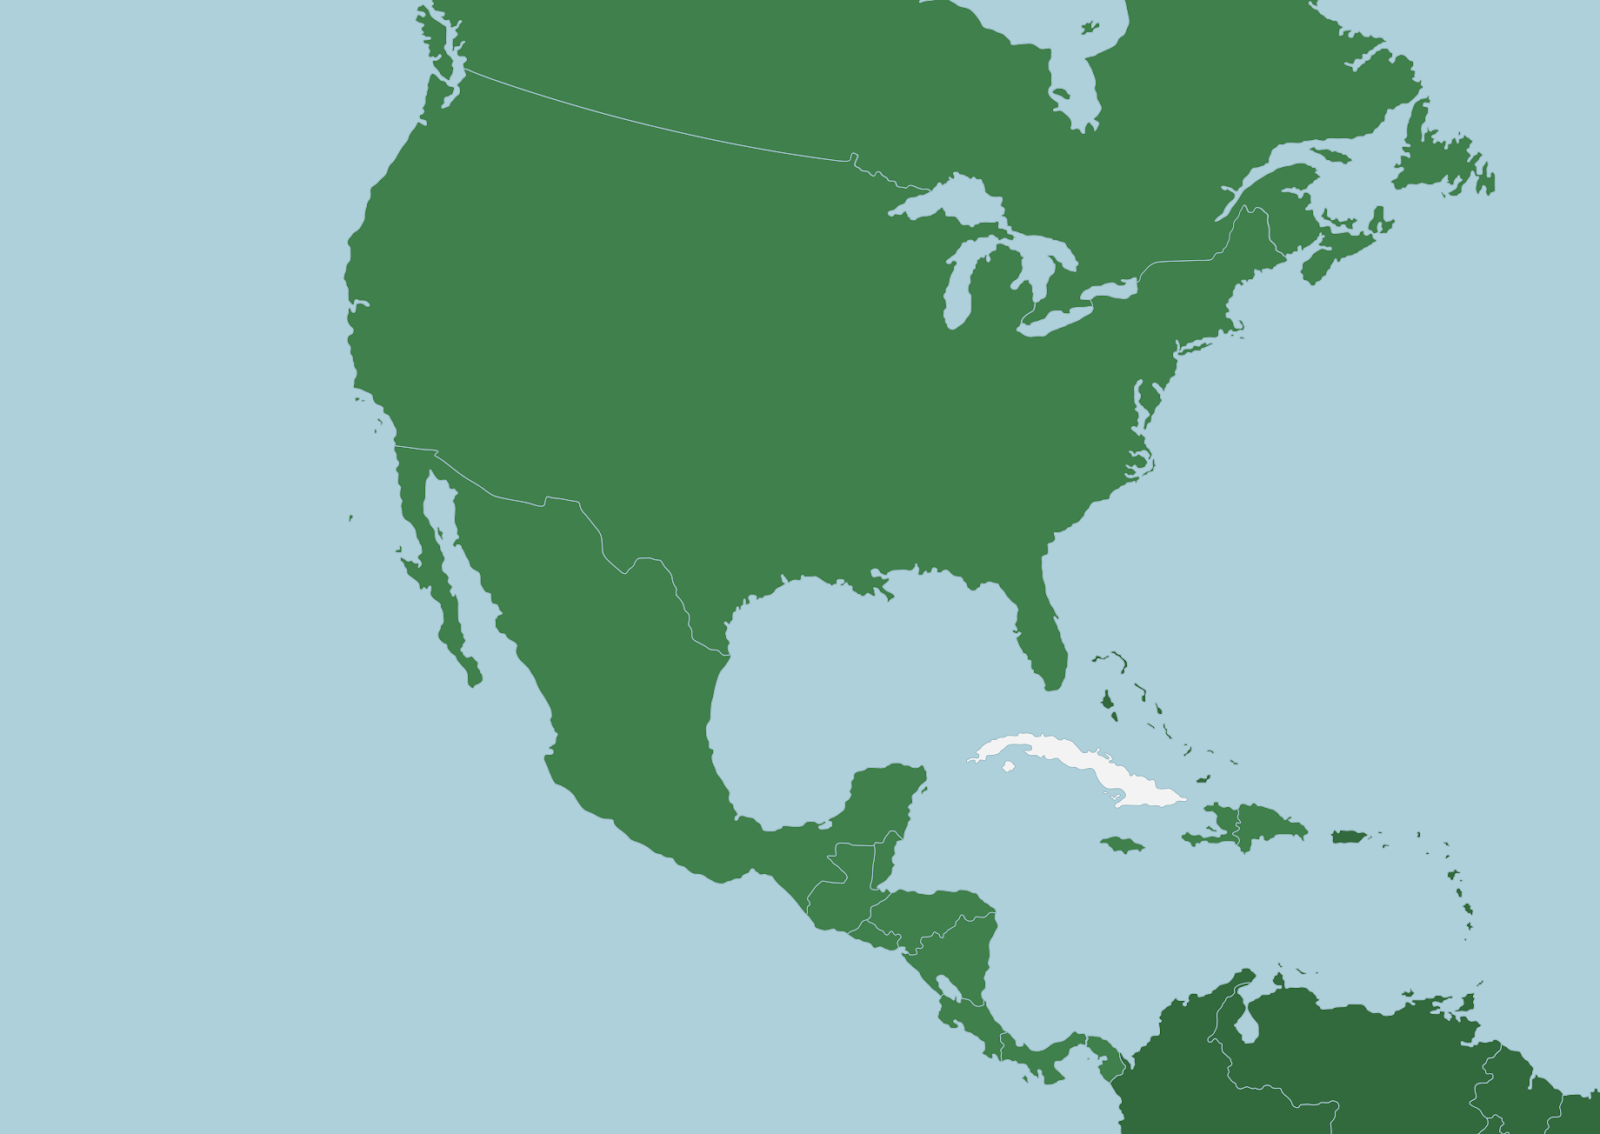 Центральная Америка материк. Континент Центральная Америка. Северная Америка материк. Северная и Центральная Америка.